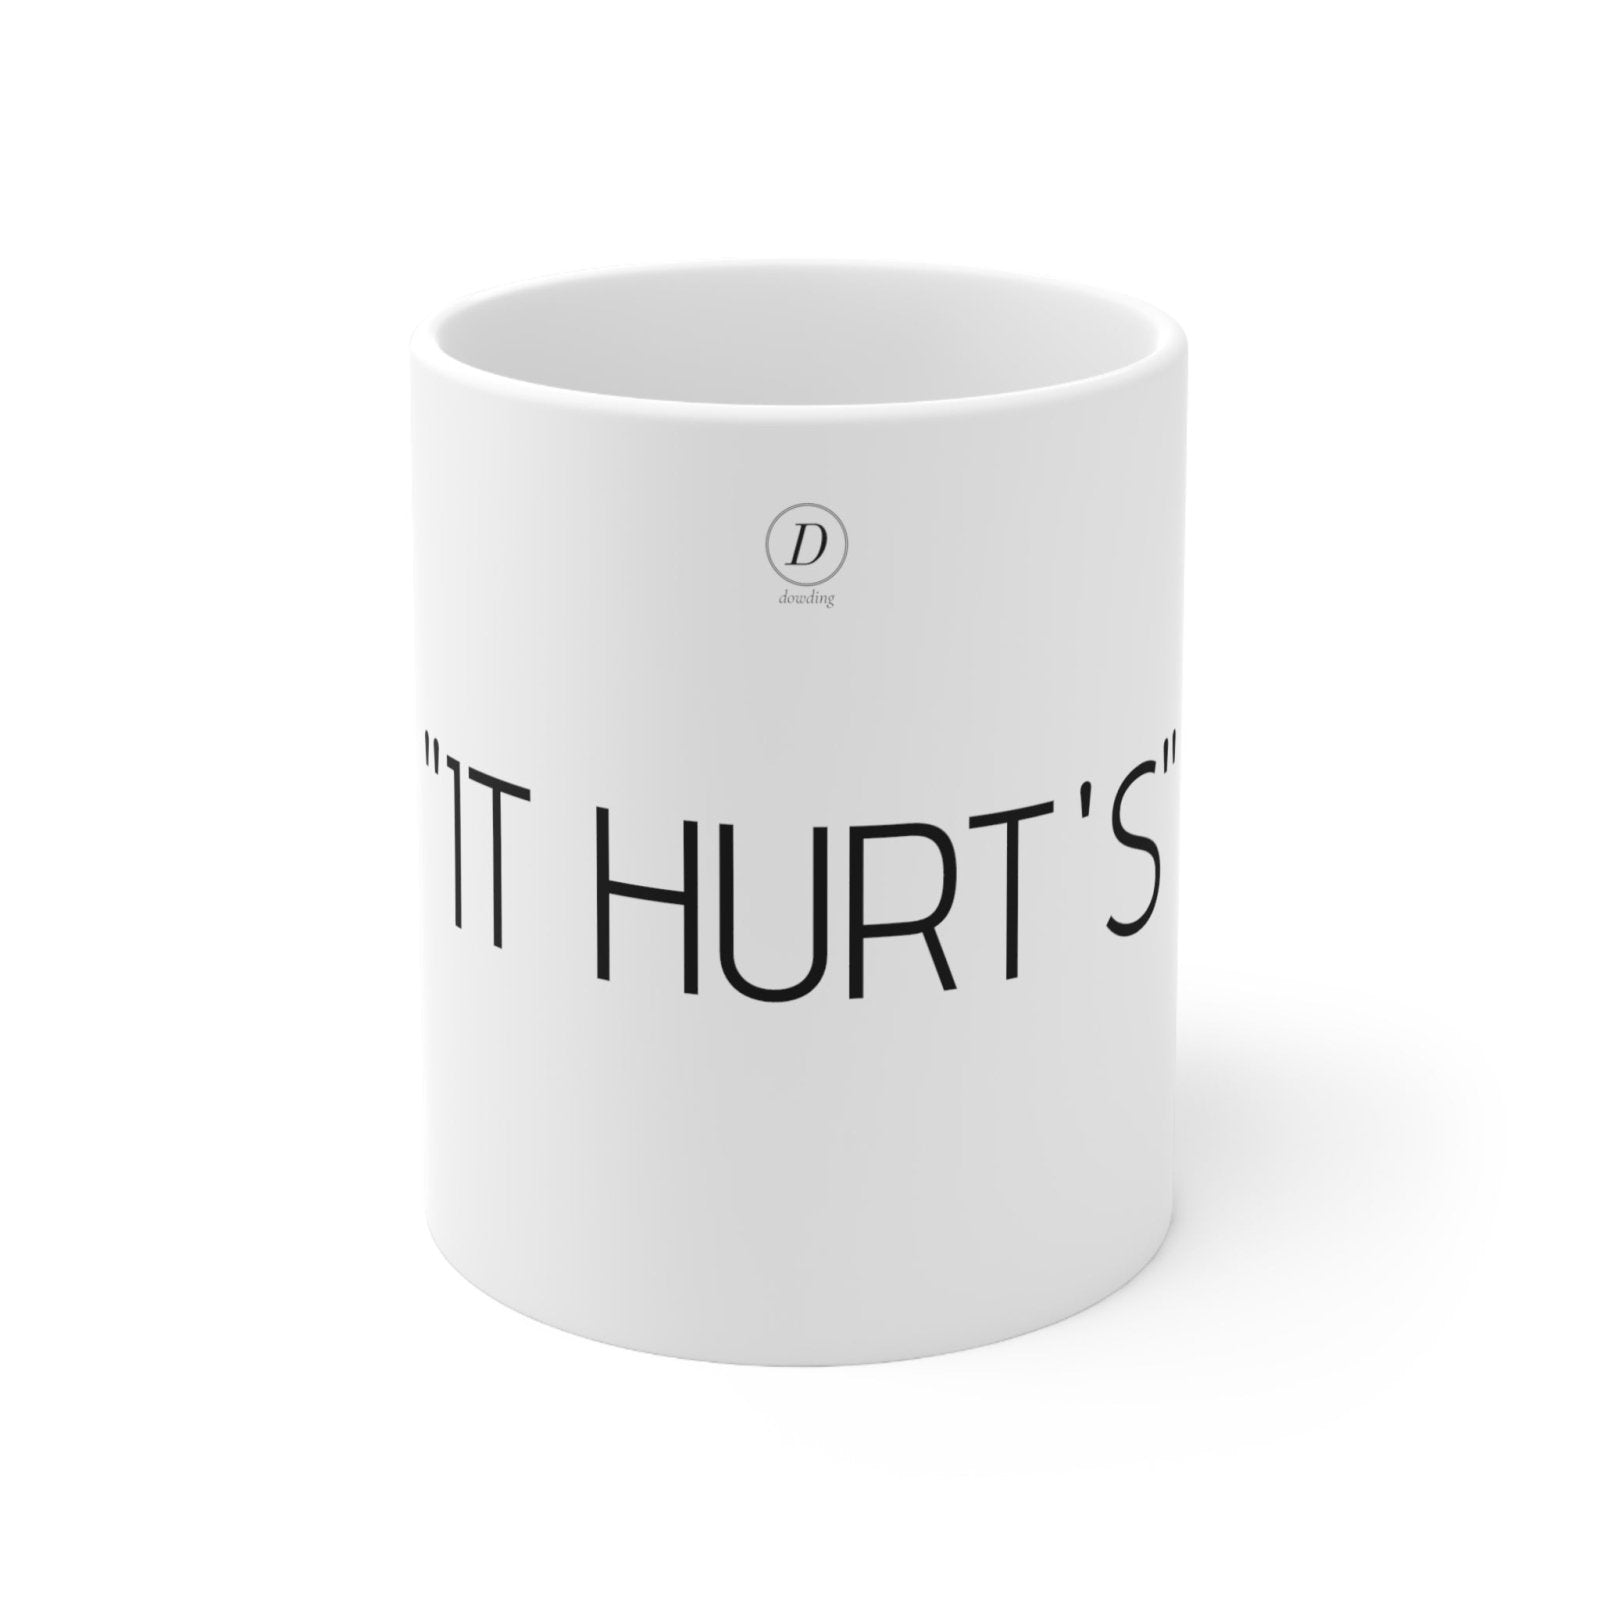 "IT HURT'S" Motivational Ceramic Mug 11oz - Dowding